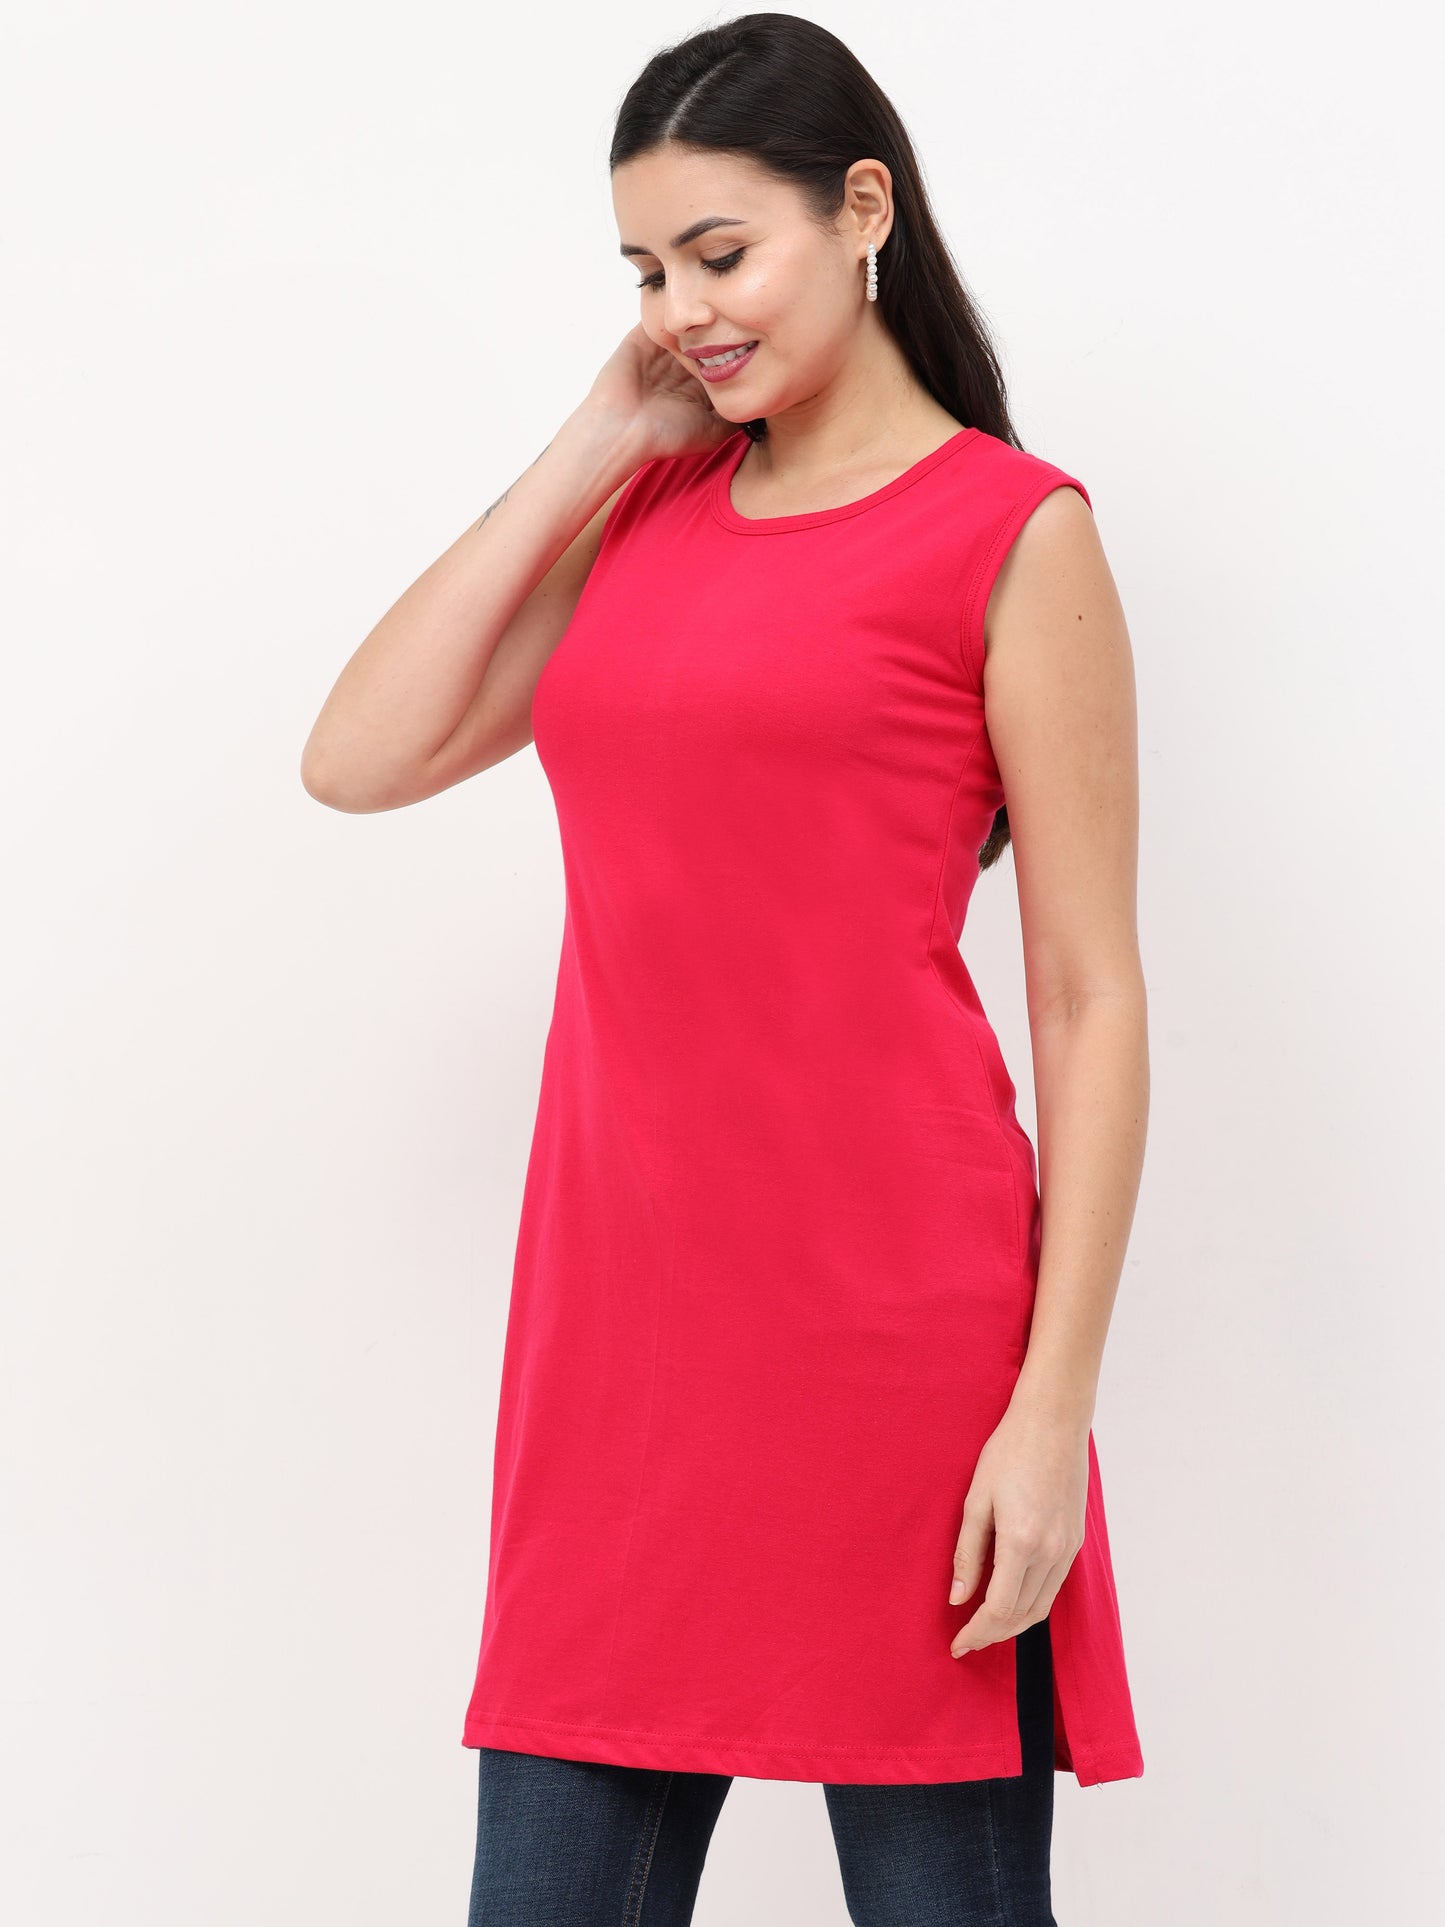 Women's Cotton Round Neck Plain Pink Color Sleeveless Long Top